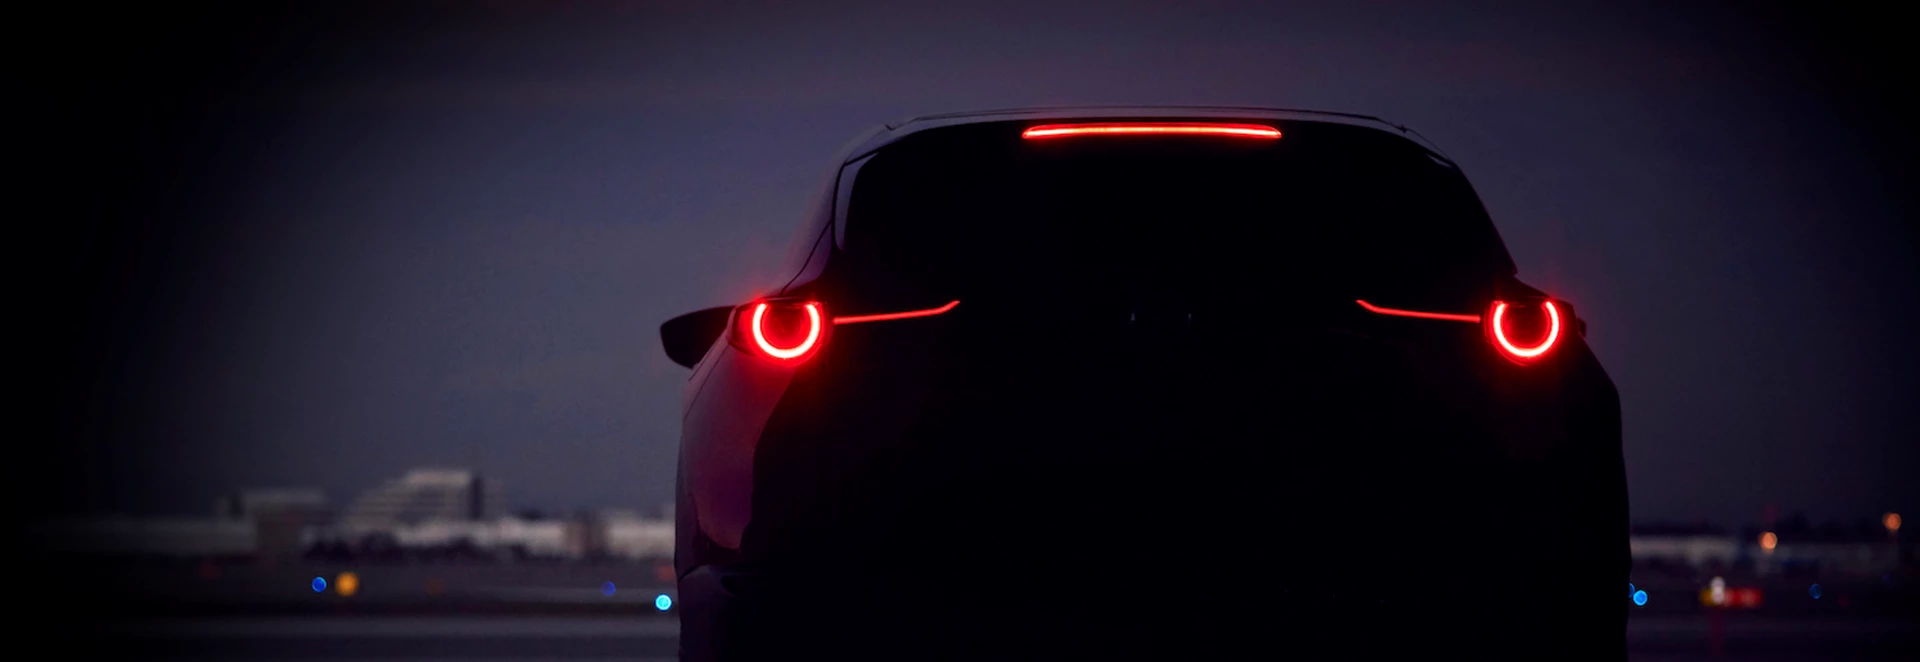 Mazda to unveil new SUV at 2019 Geneva Motor Show